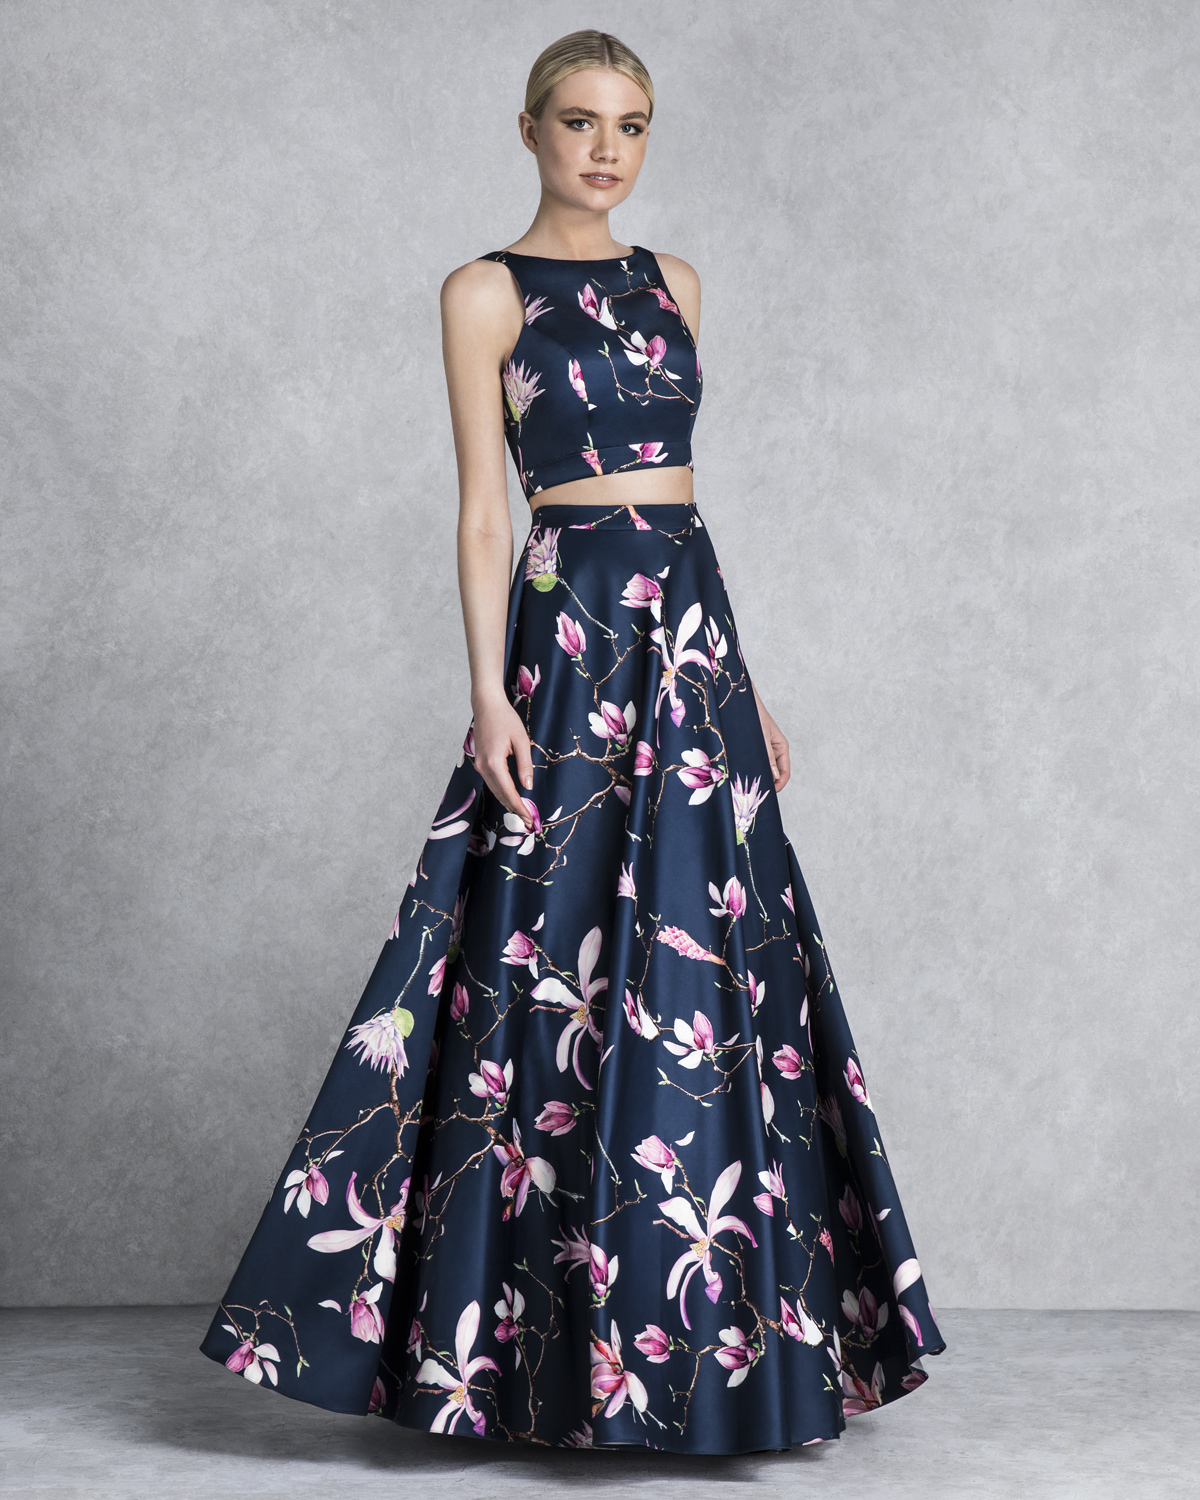 Коктейльные платья / Long floral skirt with printed or solid color top